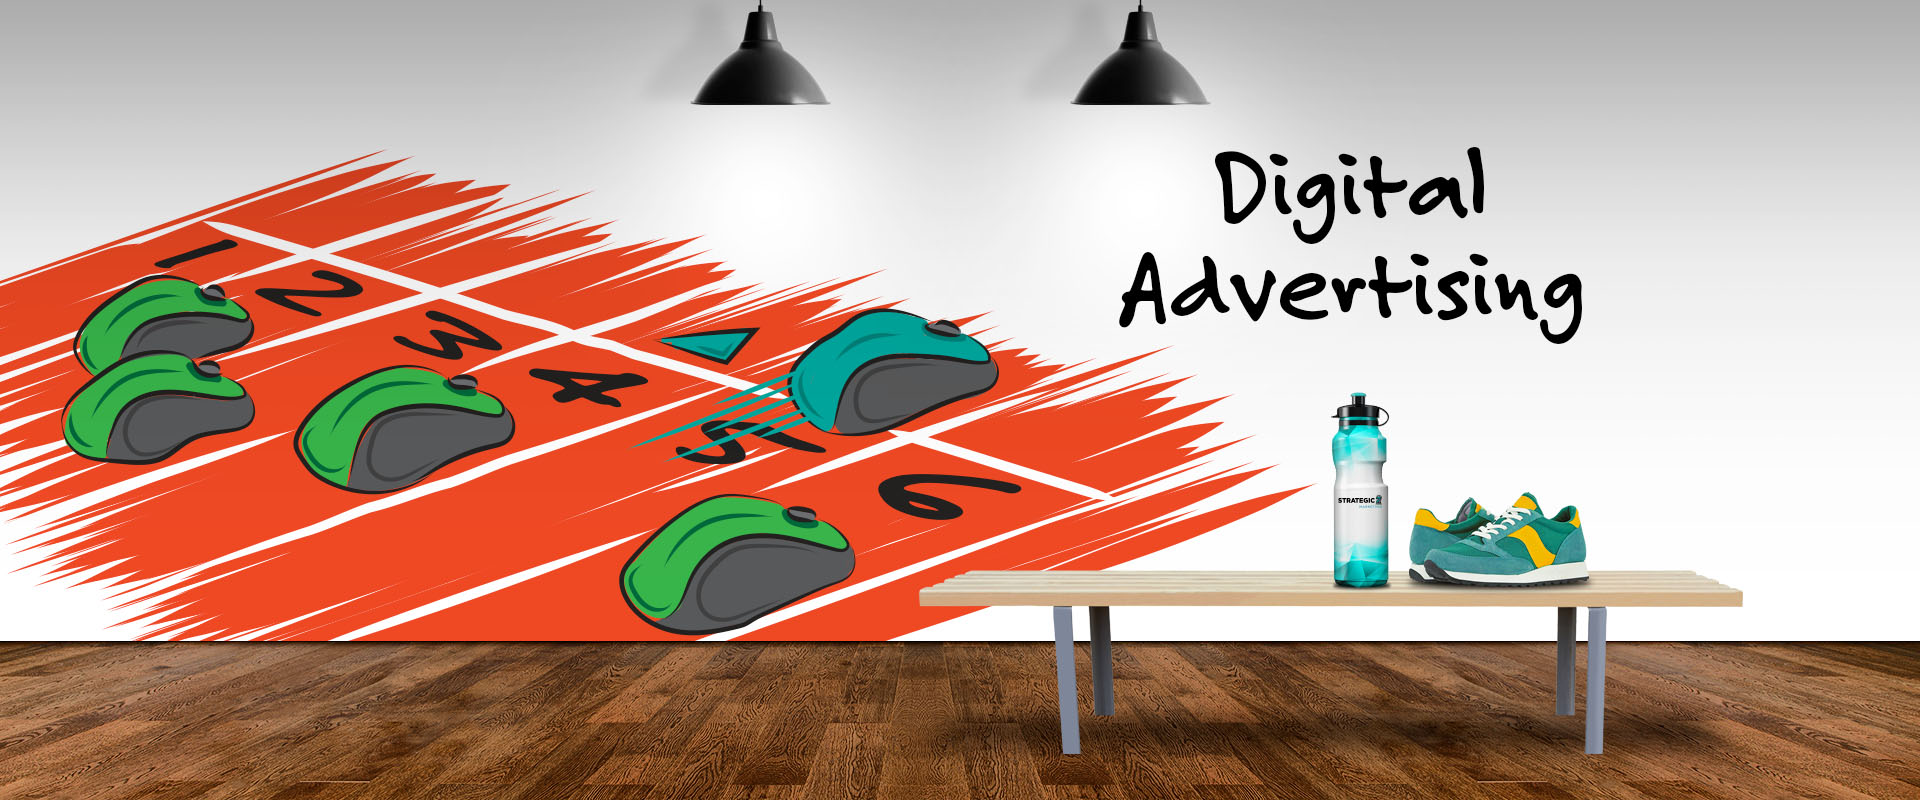 Digital-Advertising-Banner3